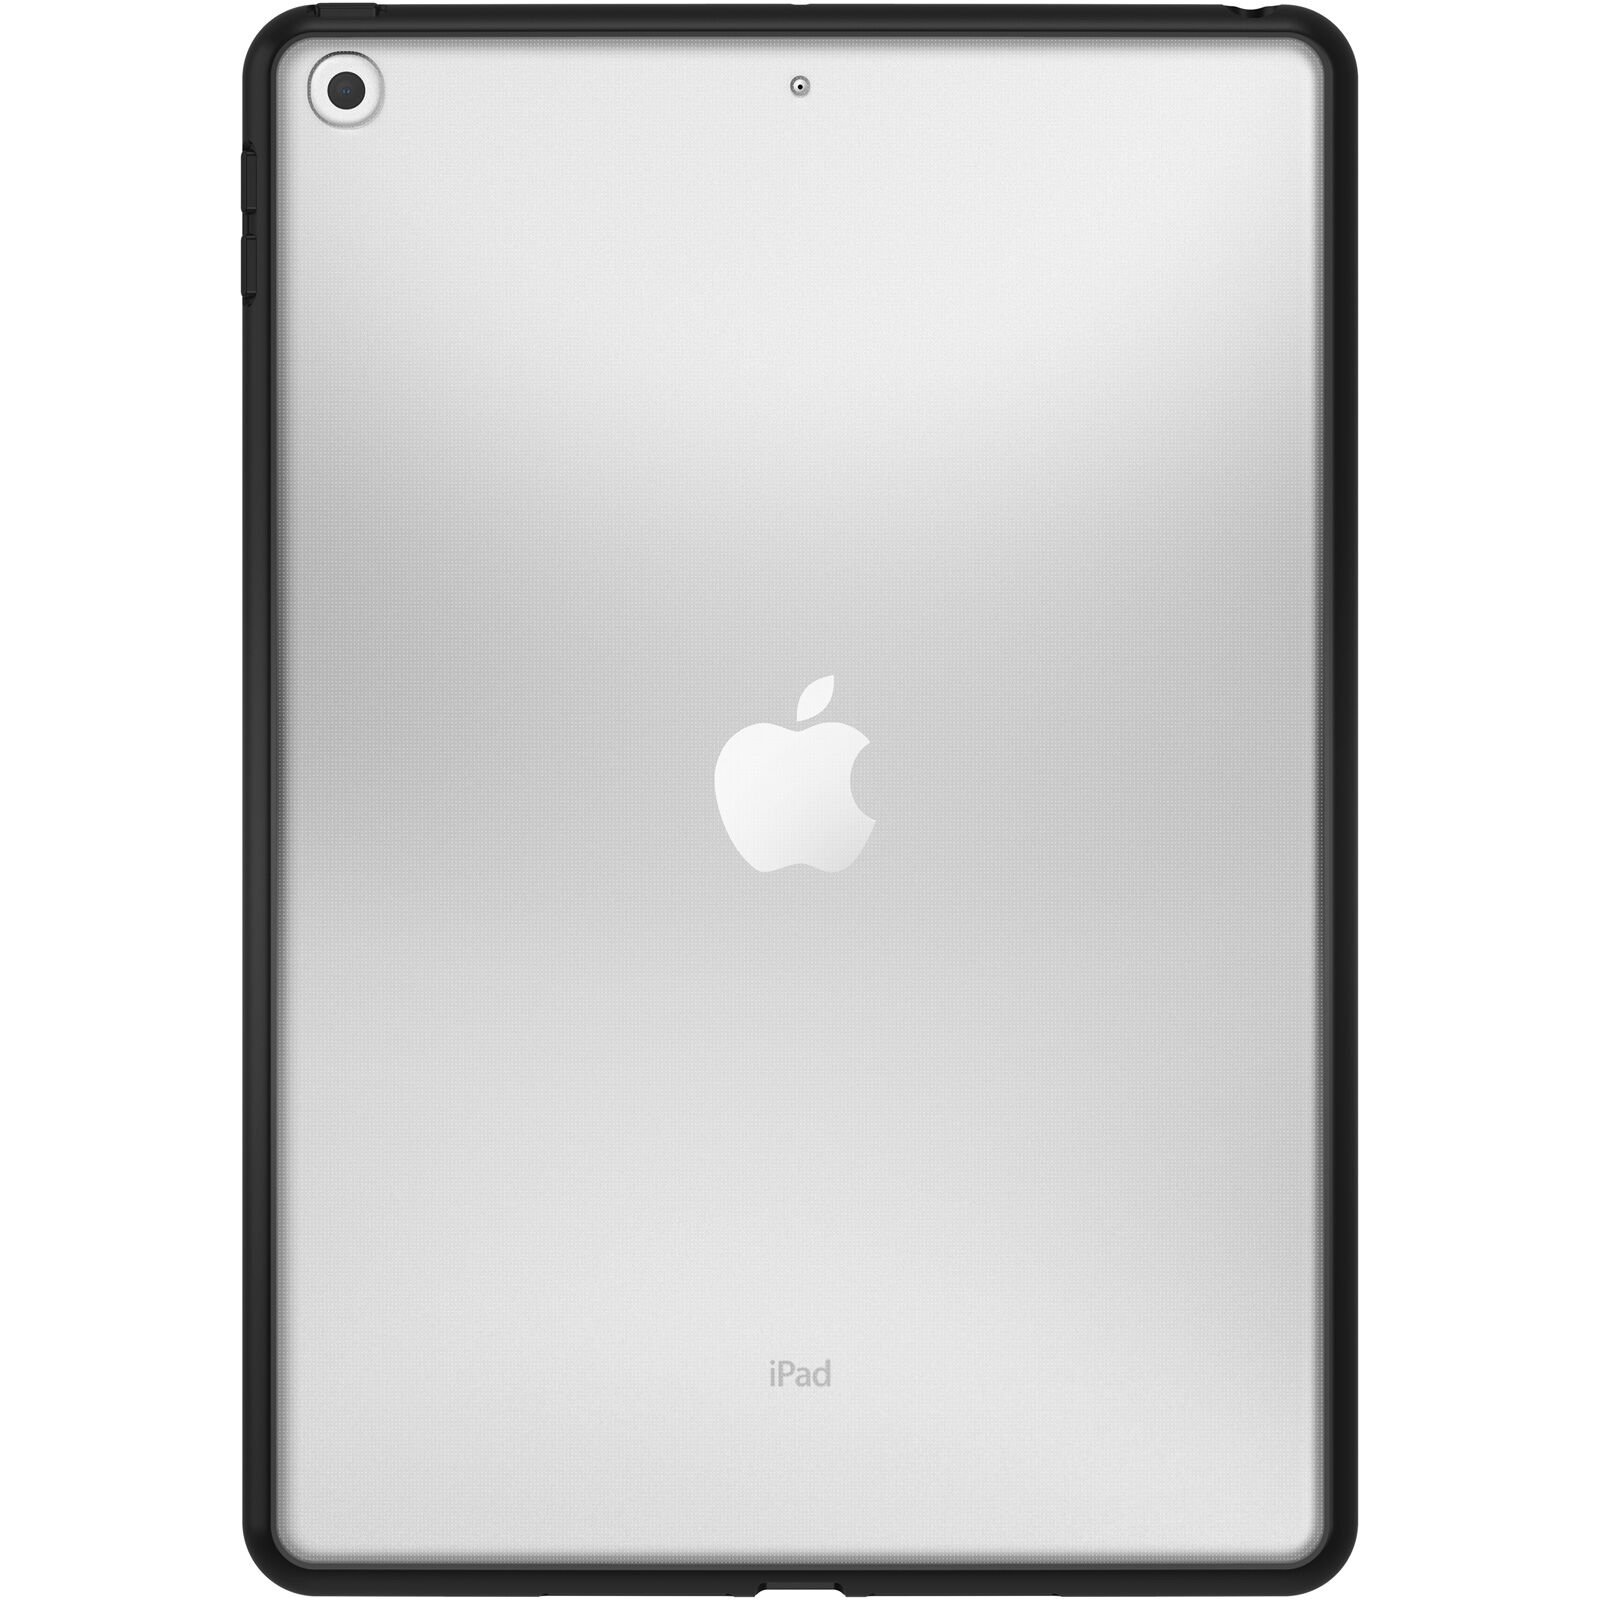 Cover React iPad 10.2 9th Gen (2021) Black Crystal